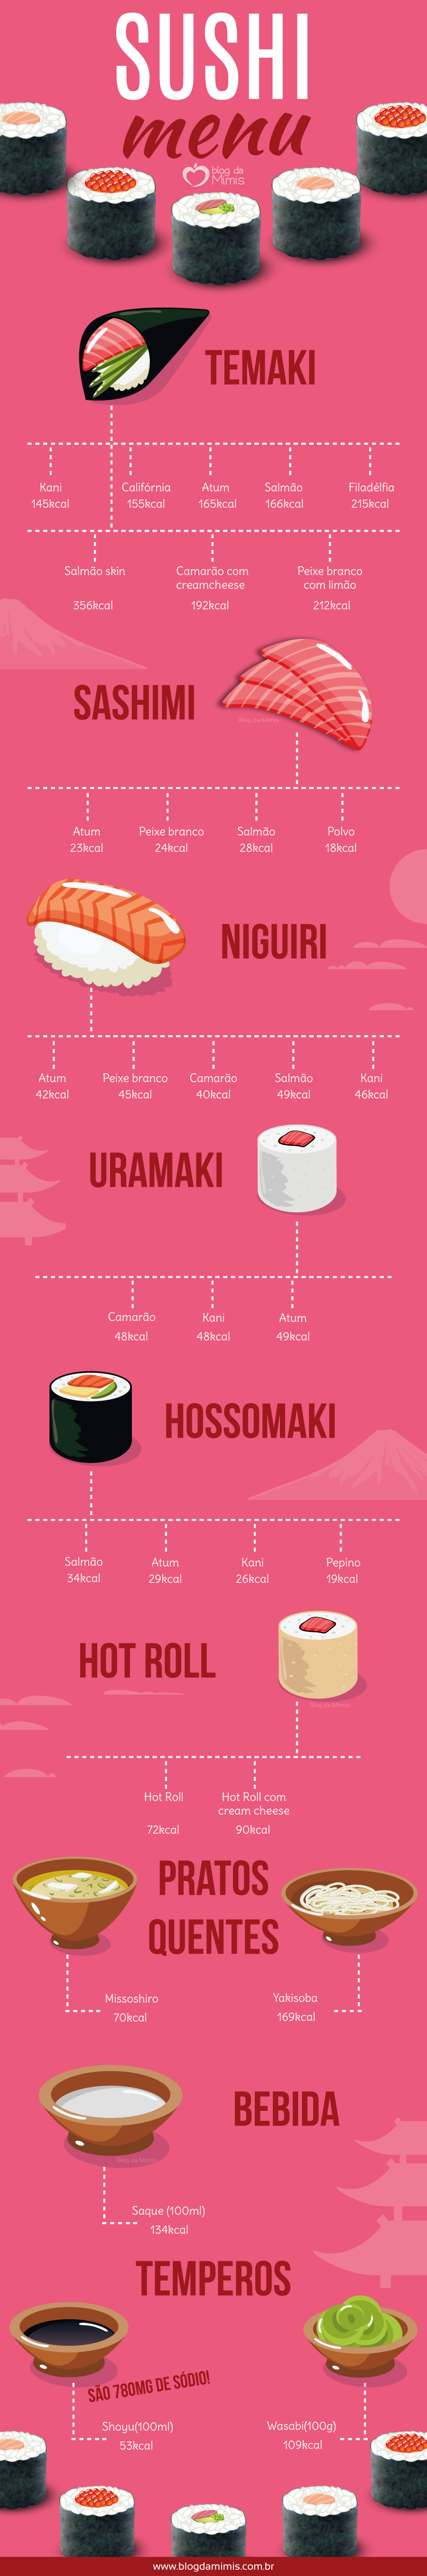 sushi-dicas-blog-da-mimis-michelle-franzoni-post